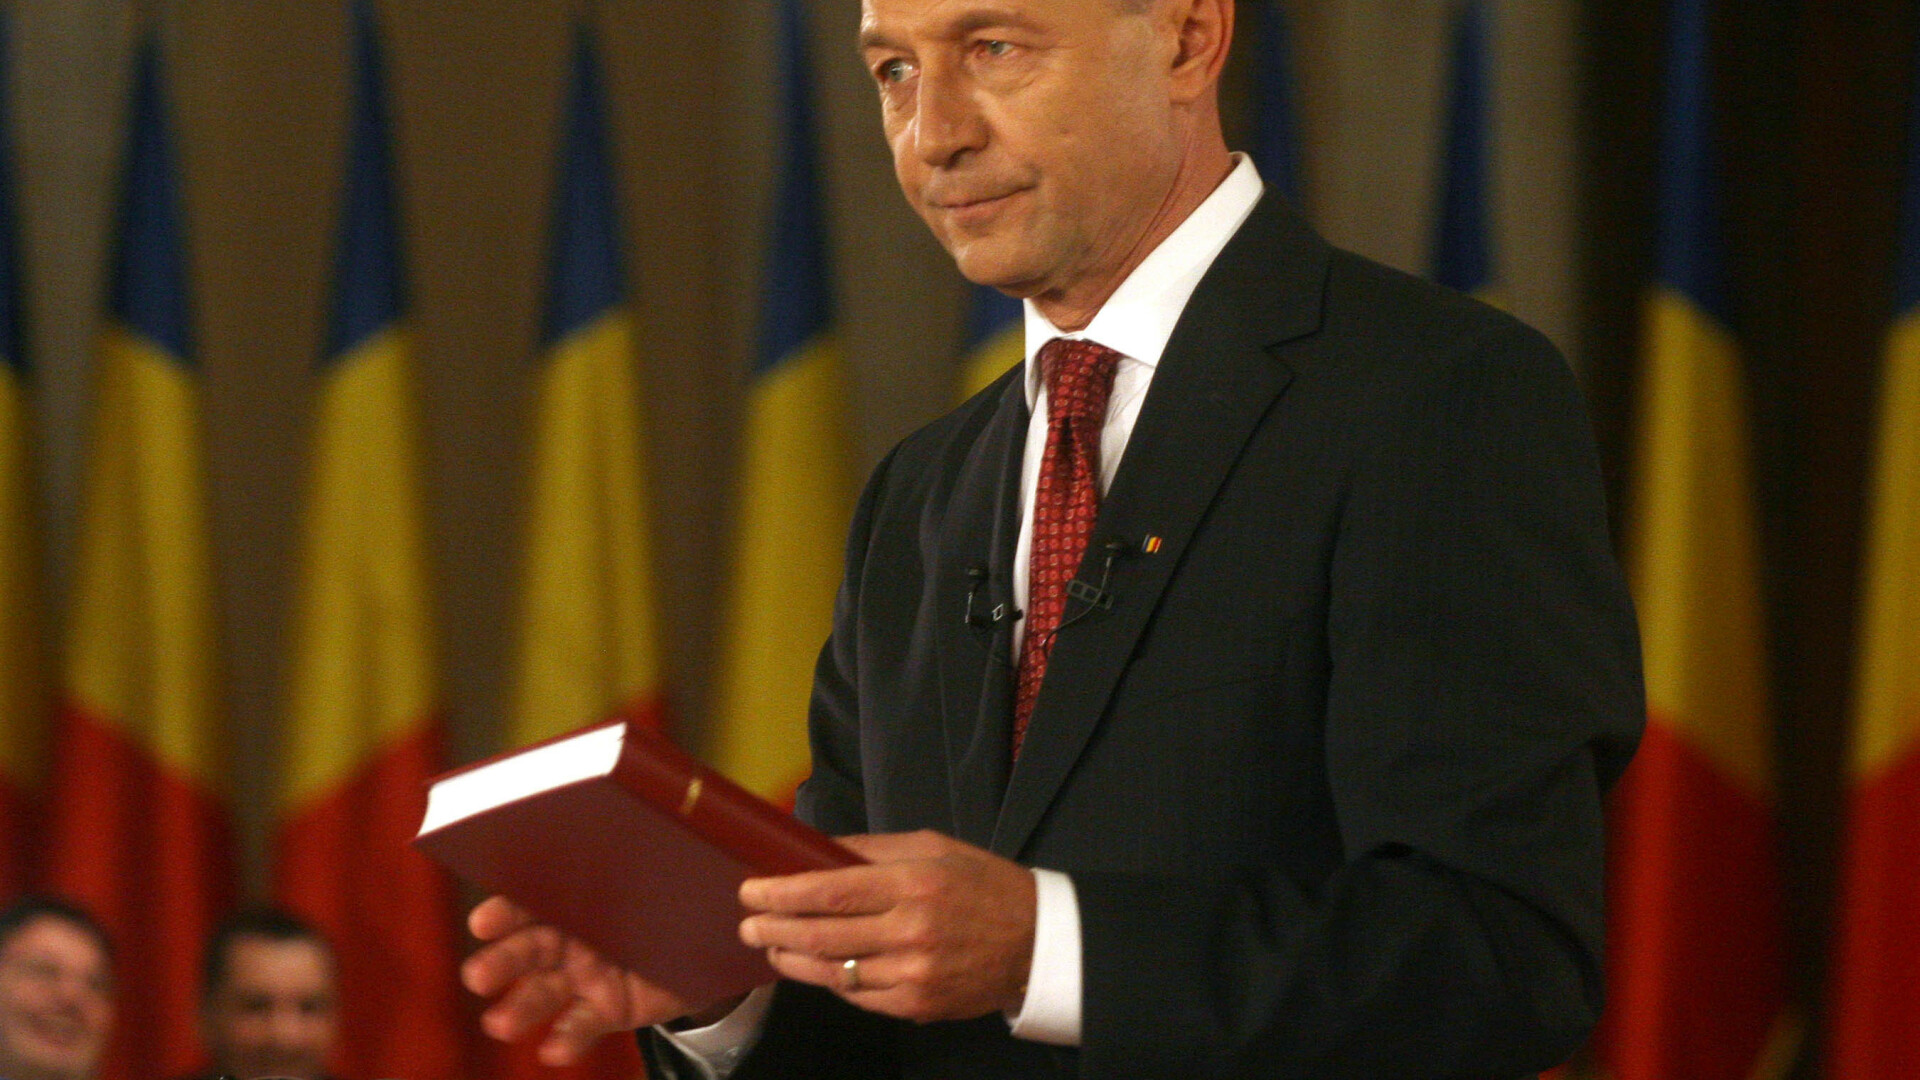 Traian Basescu - 2